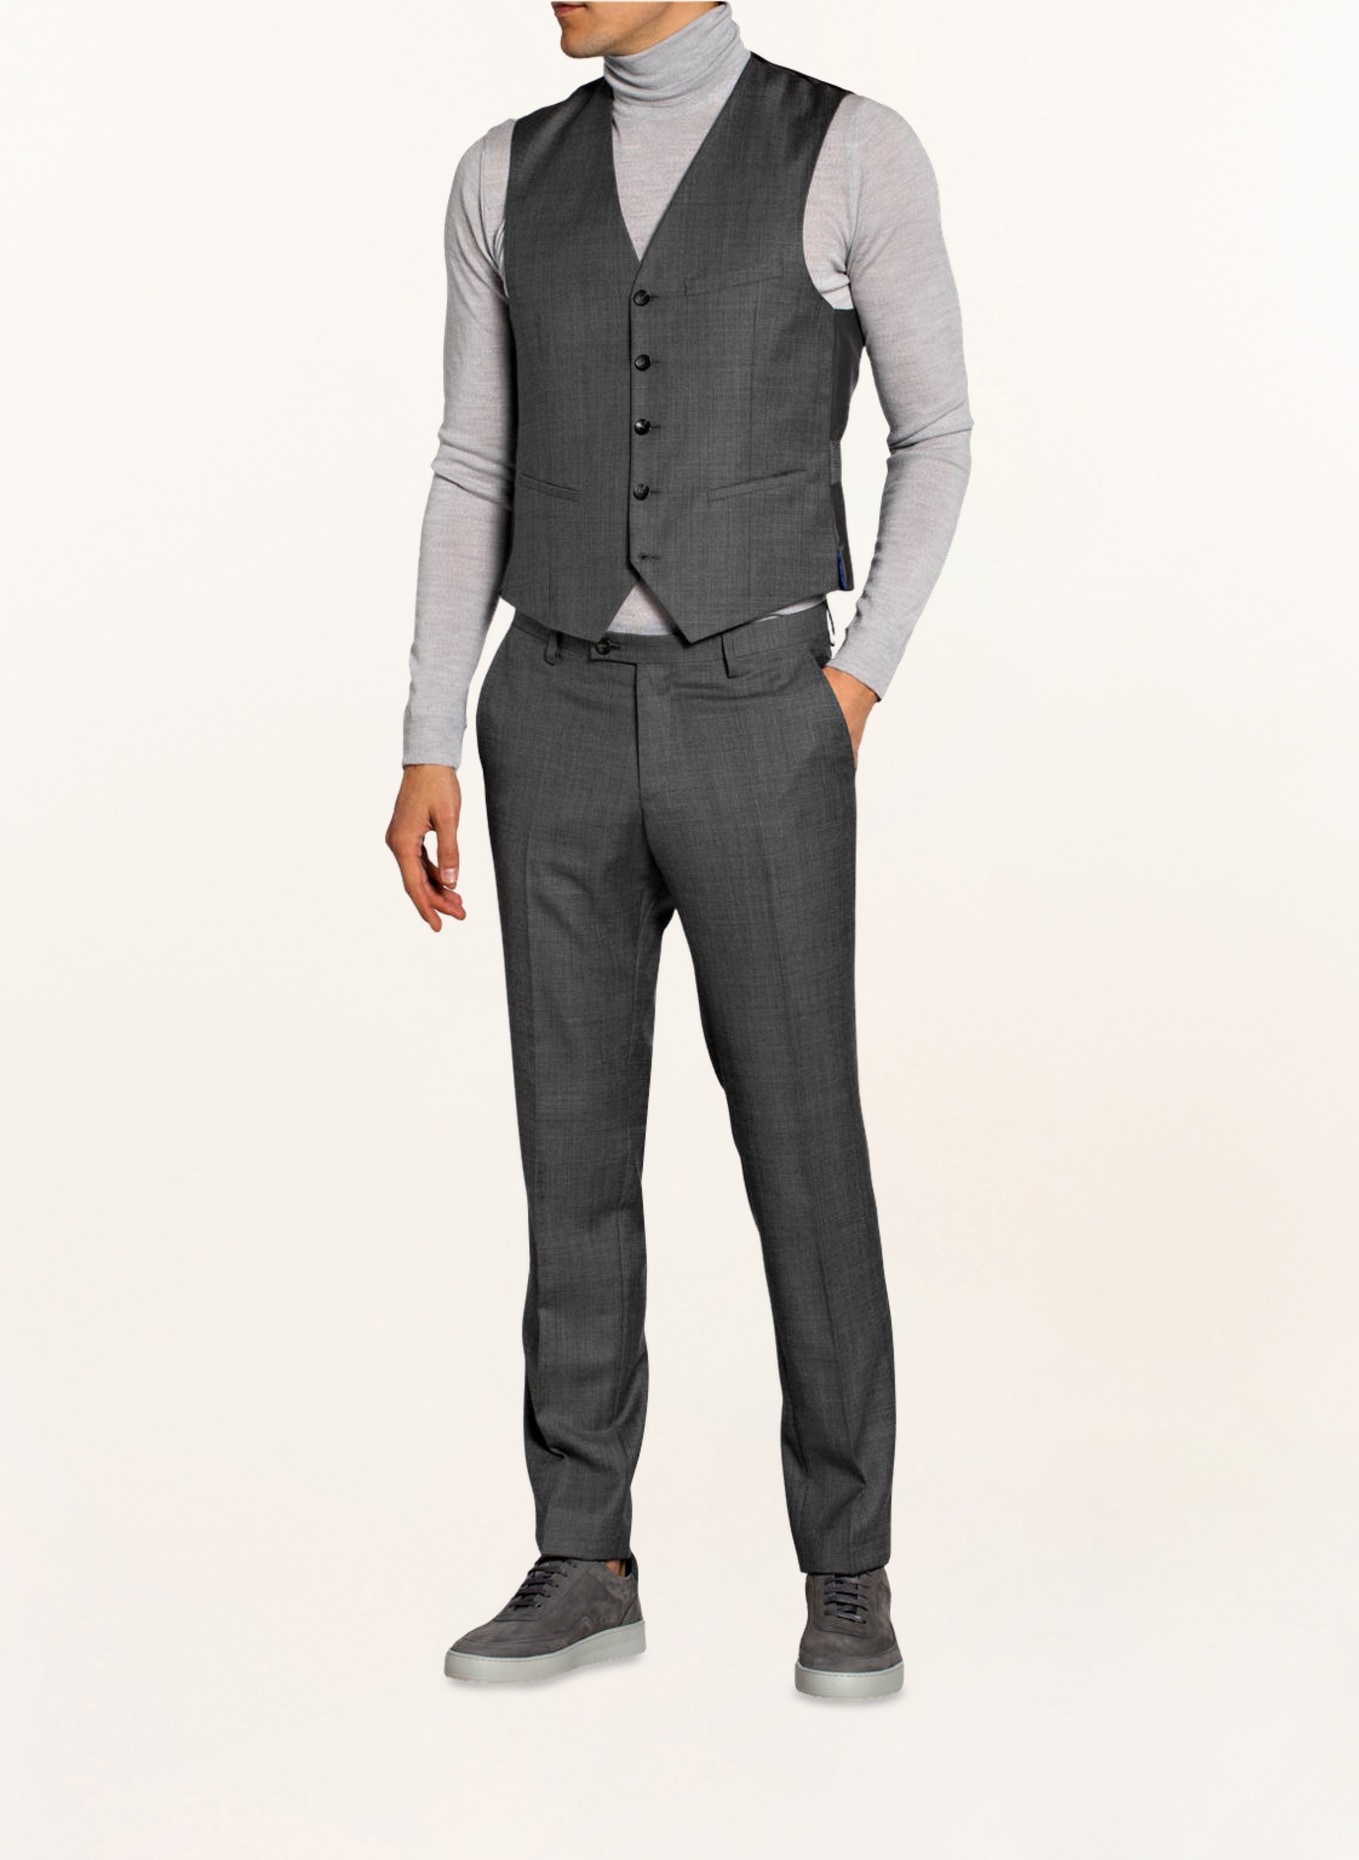 CG - CLUB of GENTS Suit jacket CURT slim fit, Color: 81 grau hell (Image 3)